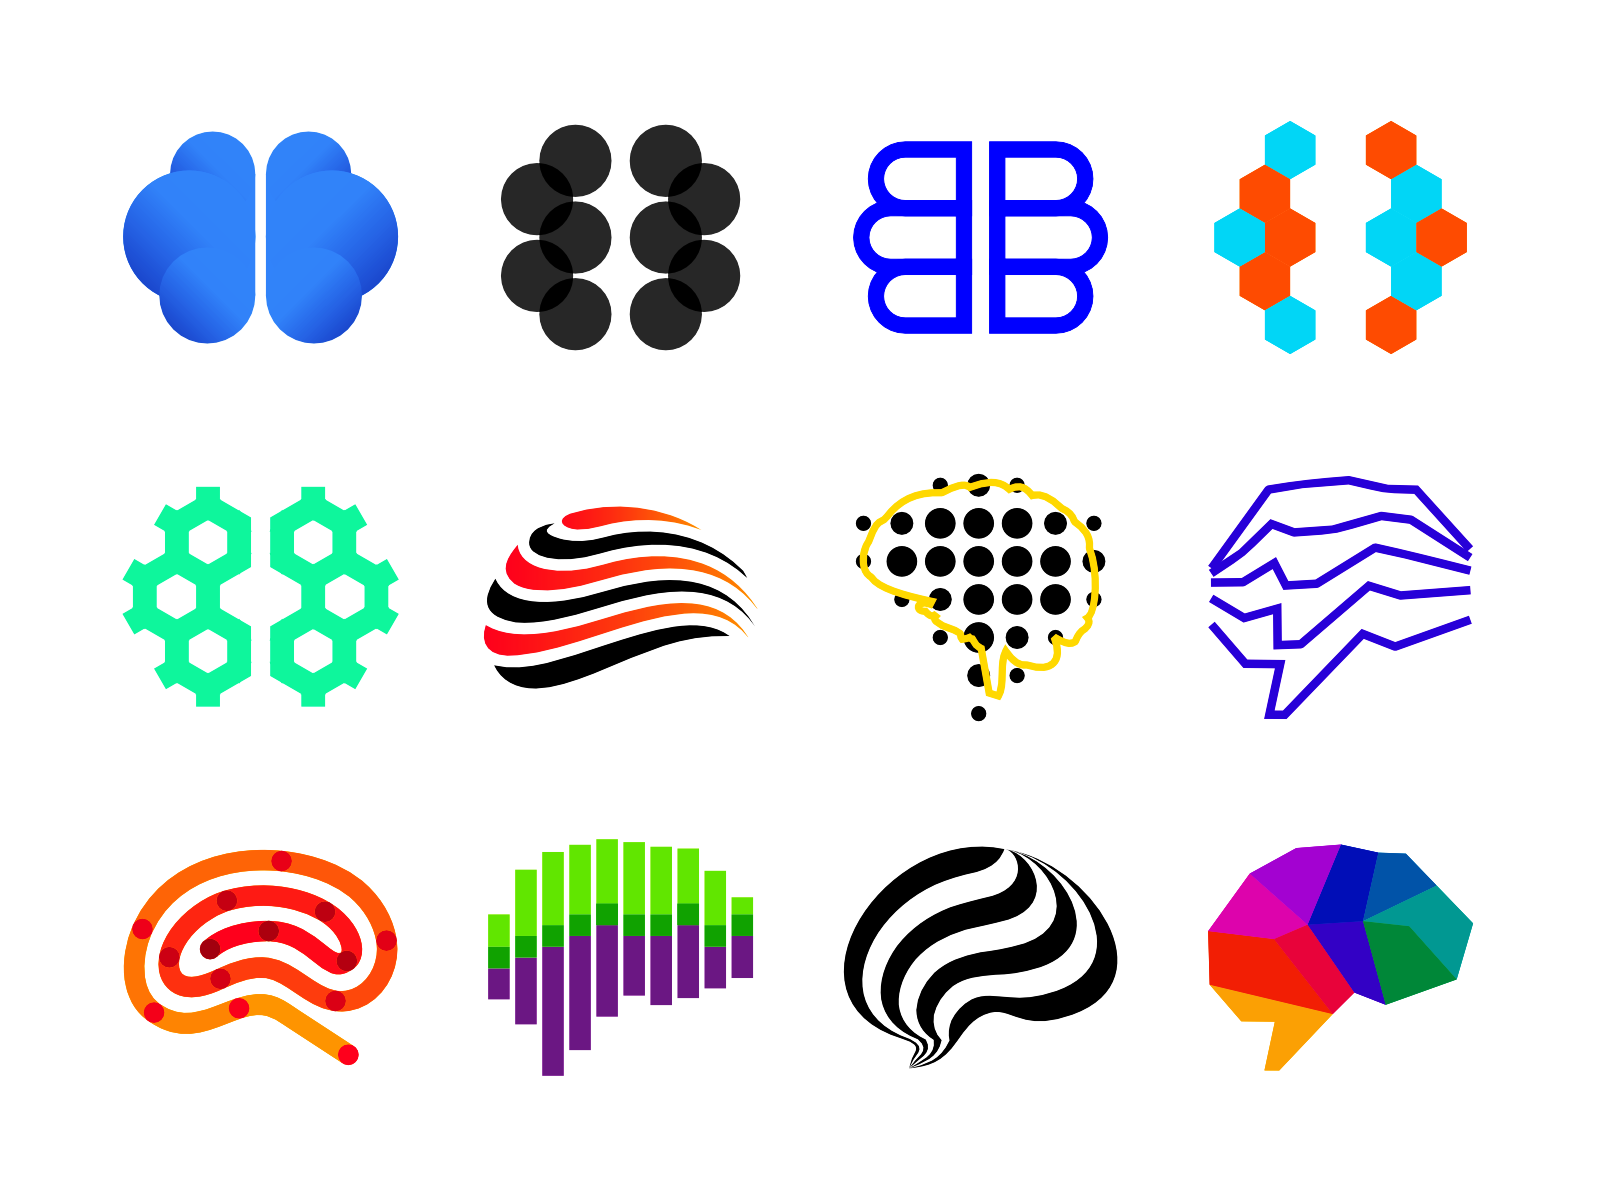 Brain / brains logos / logo design collection by Alex Tass, logo designer  on Dribbble